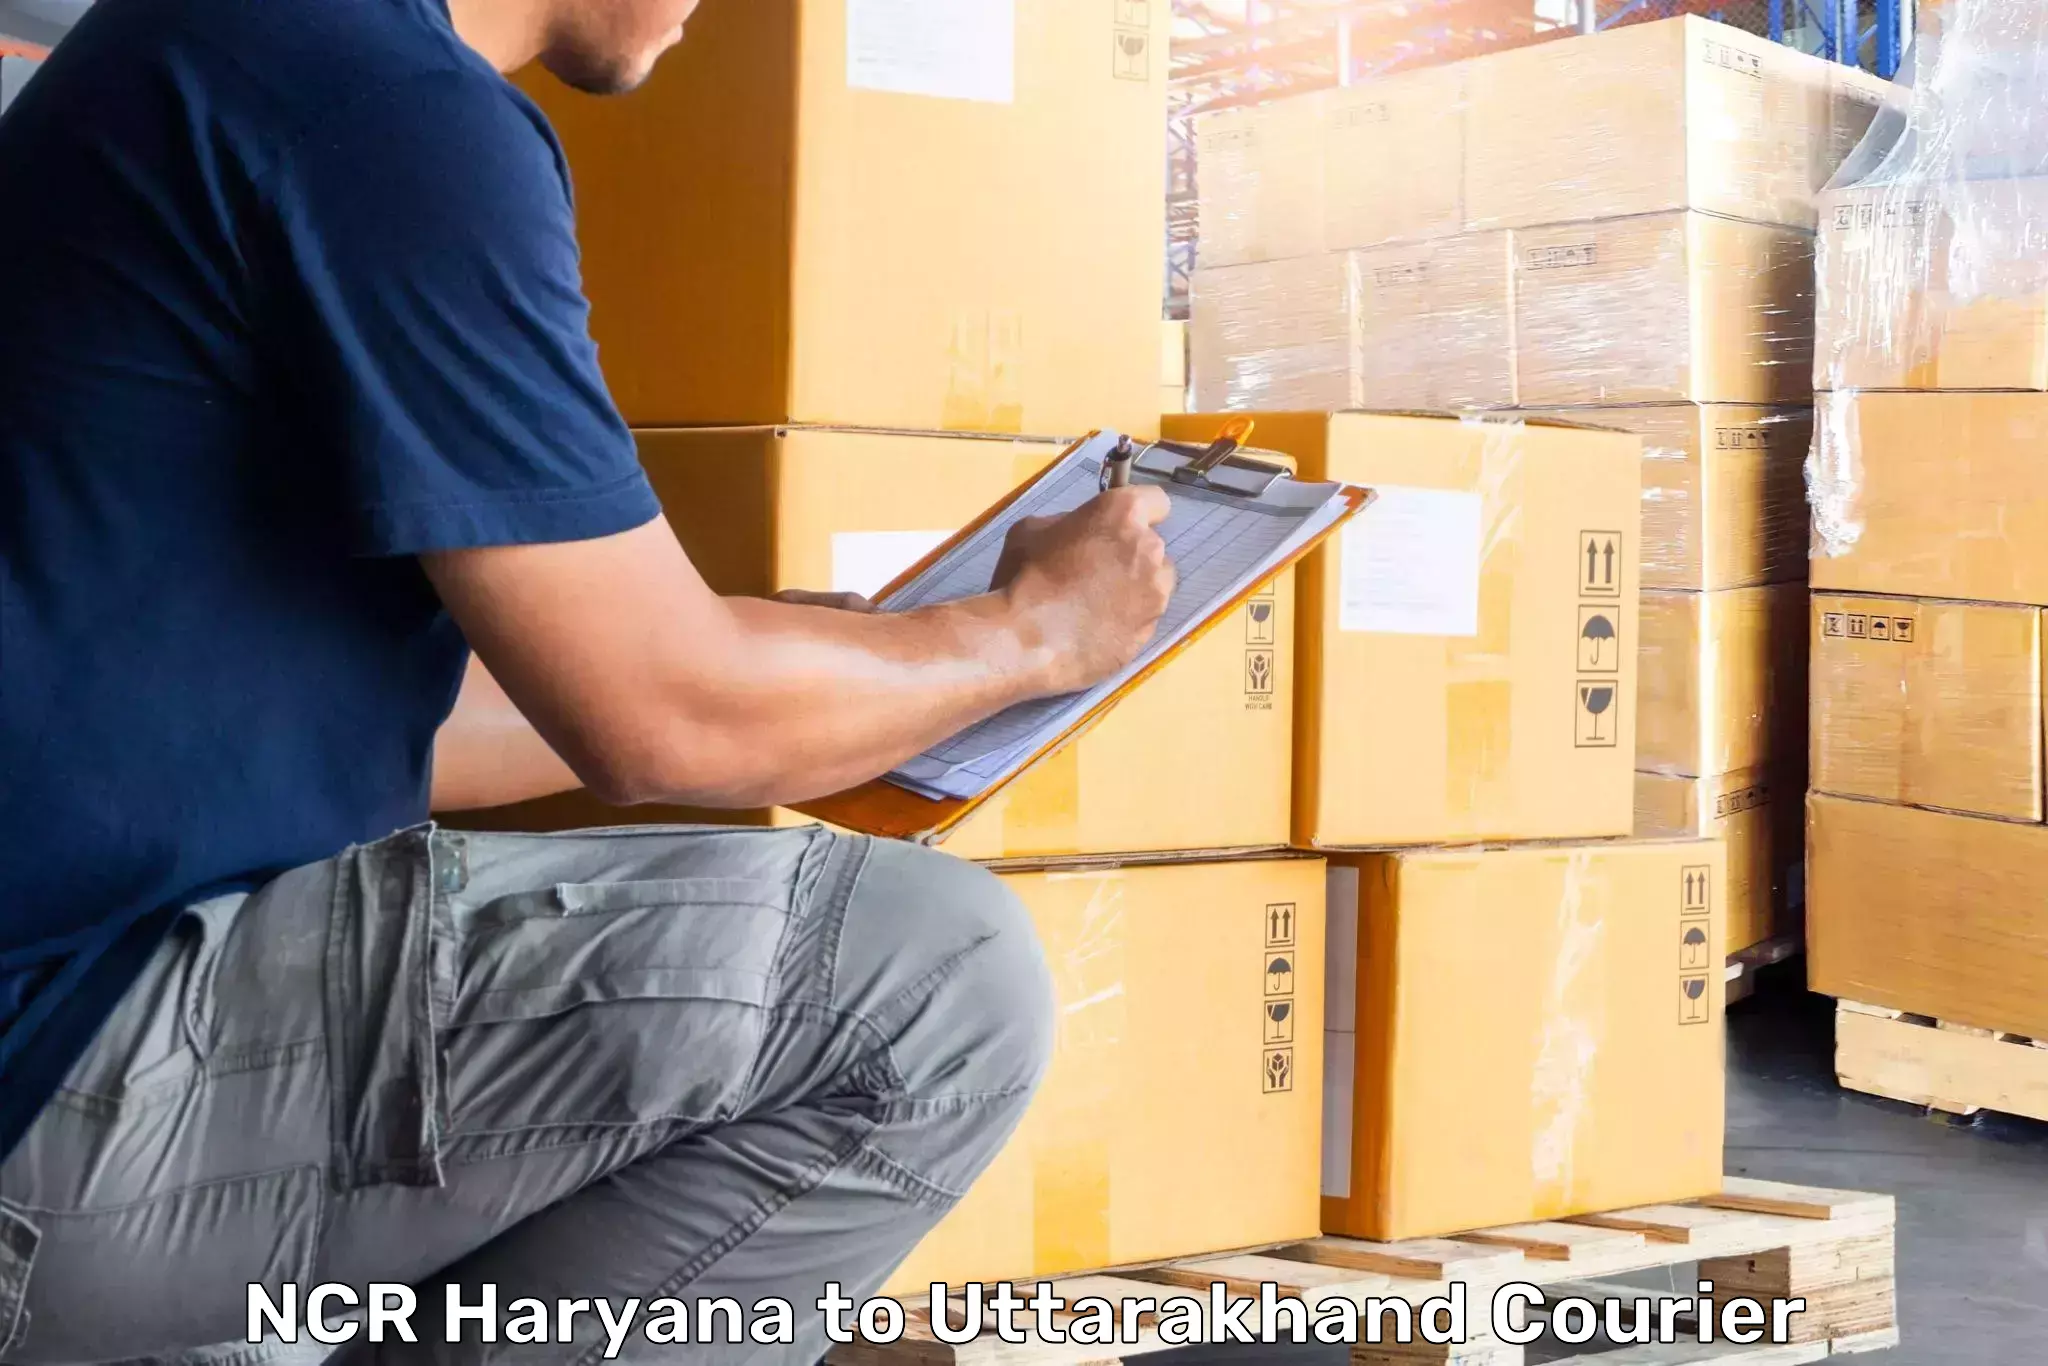 Luggage delivery network NCR Haryana to Uttarakhand